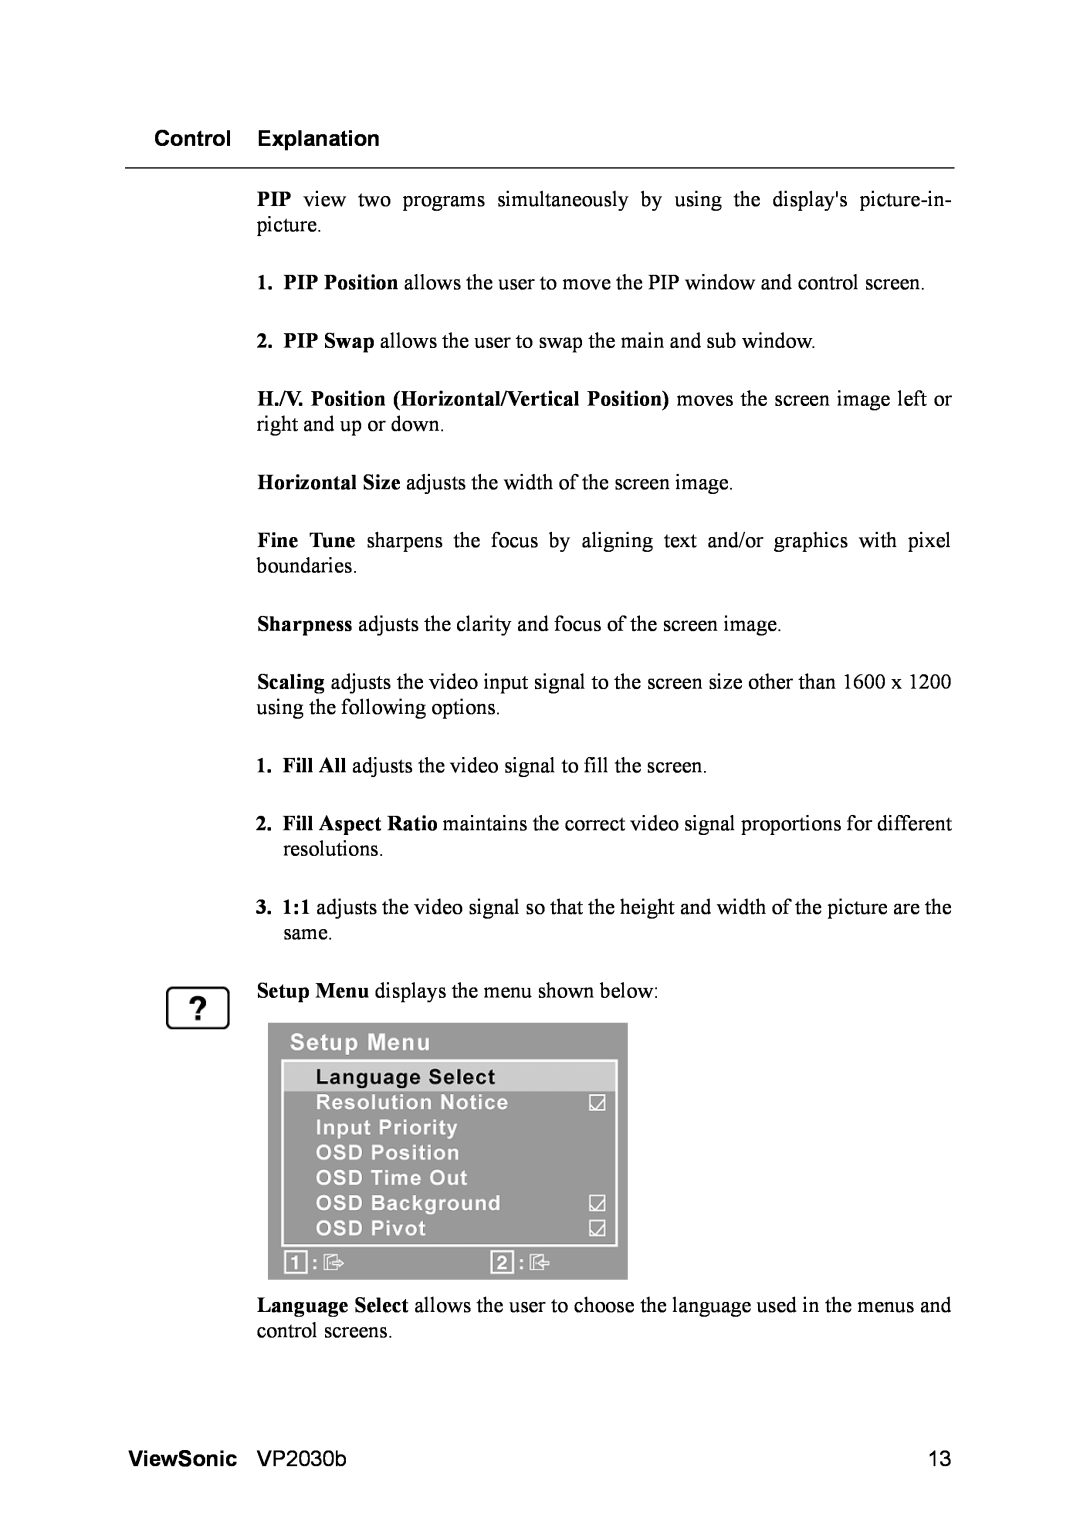 ViewSonic VP2030B manual Control Explanation, Setup Menu displays the menu shown below, ViewSonic VP2030b 